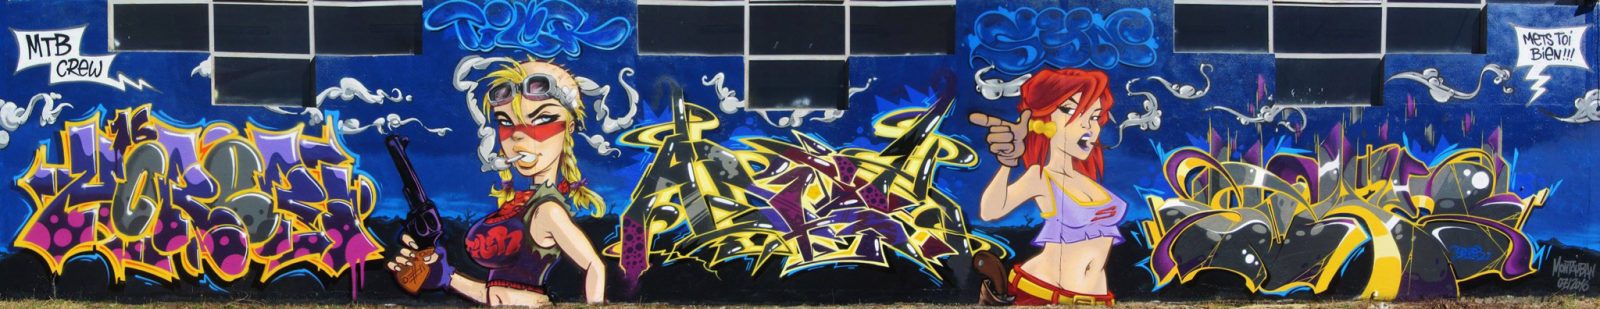 Graffiti MTB crew Montauban 2016